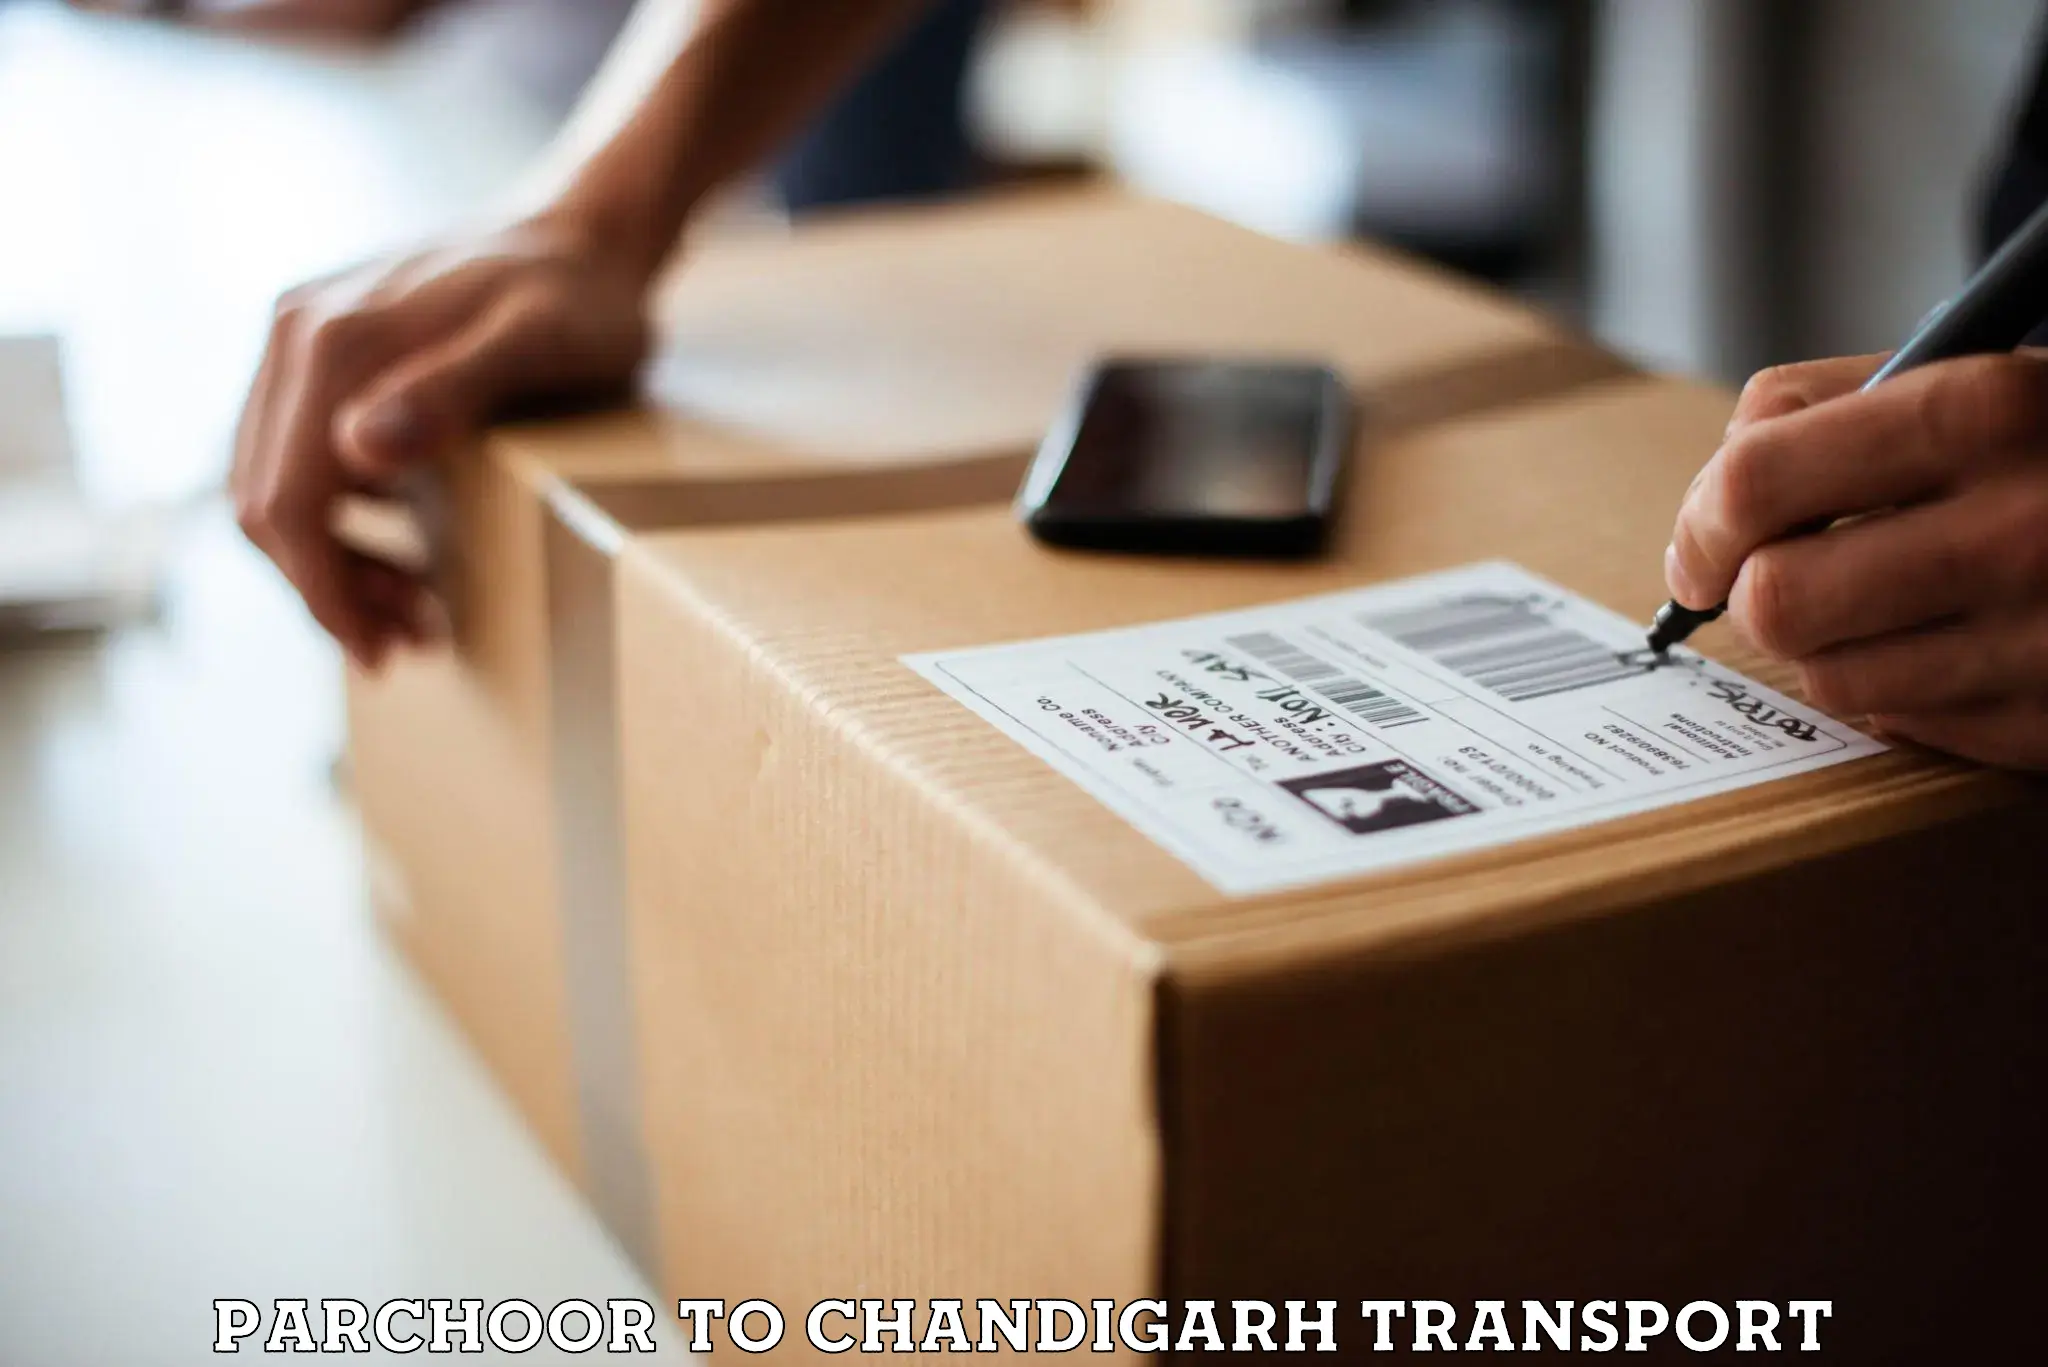 Truck transport companies in India Parchoor to Chandigarh